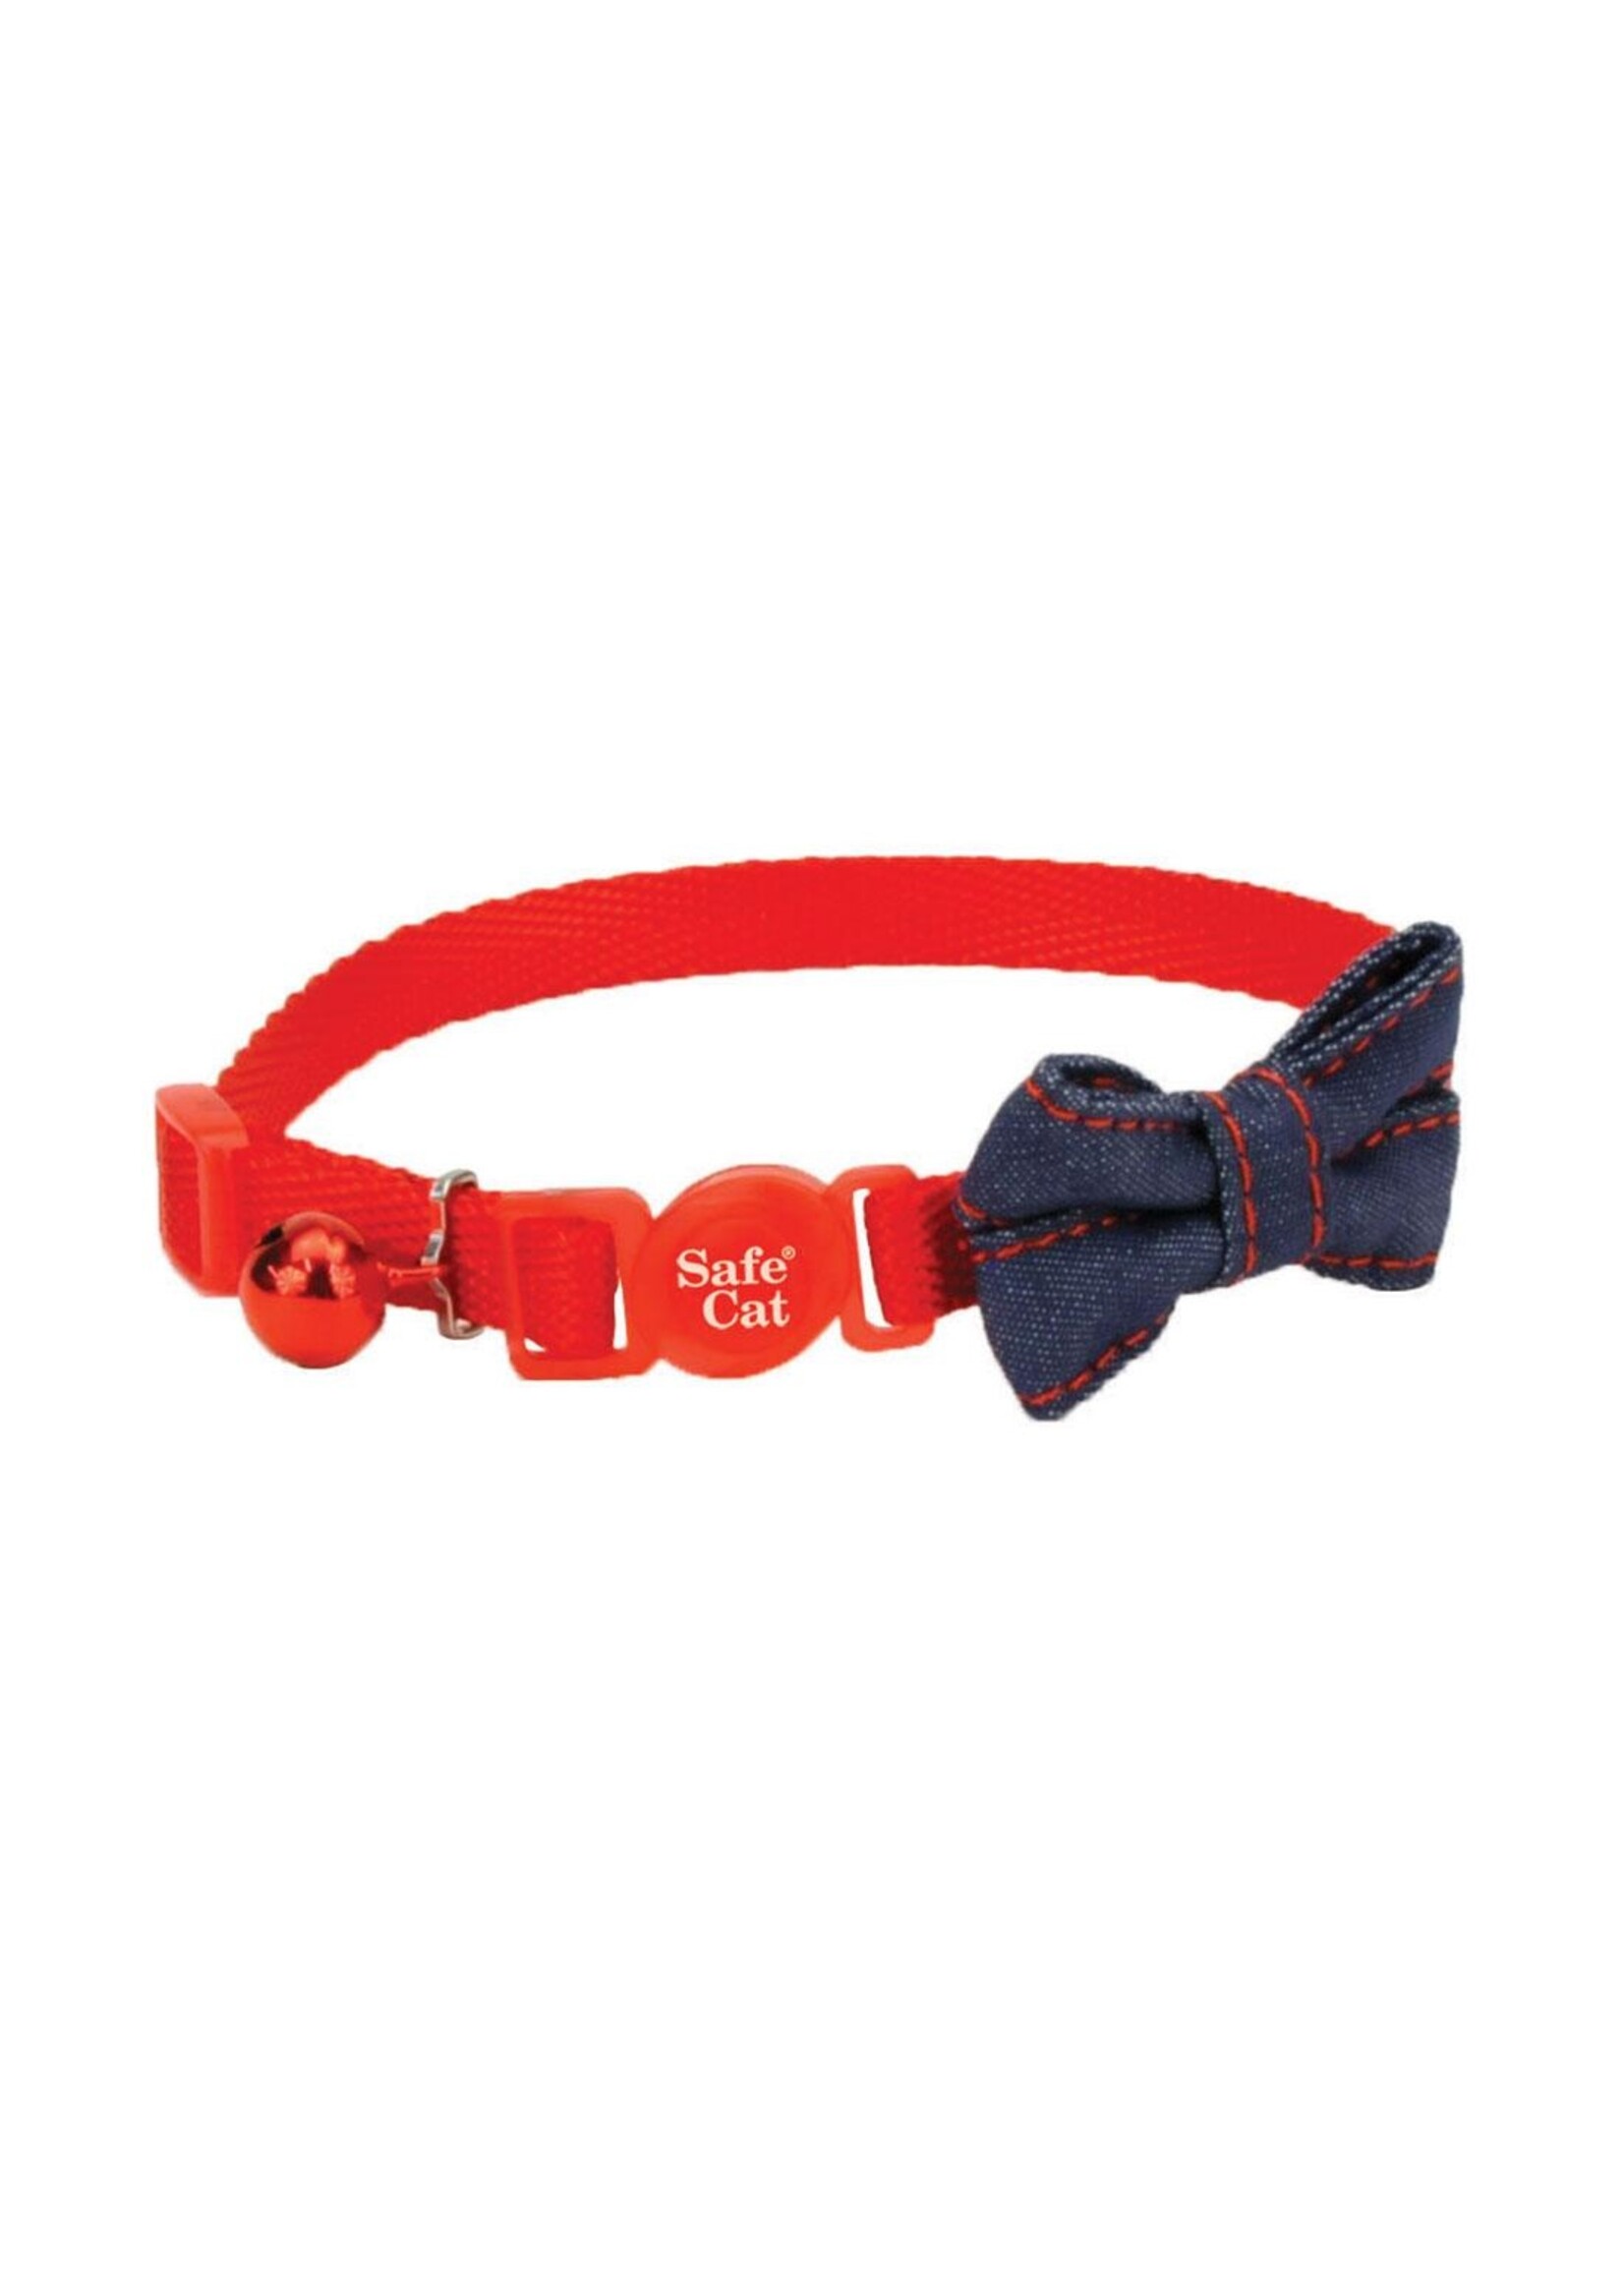 Coastal Pet Products Inc. SafeCat Embellished Fashion Collar 3/8" x 8-12"